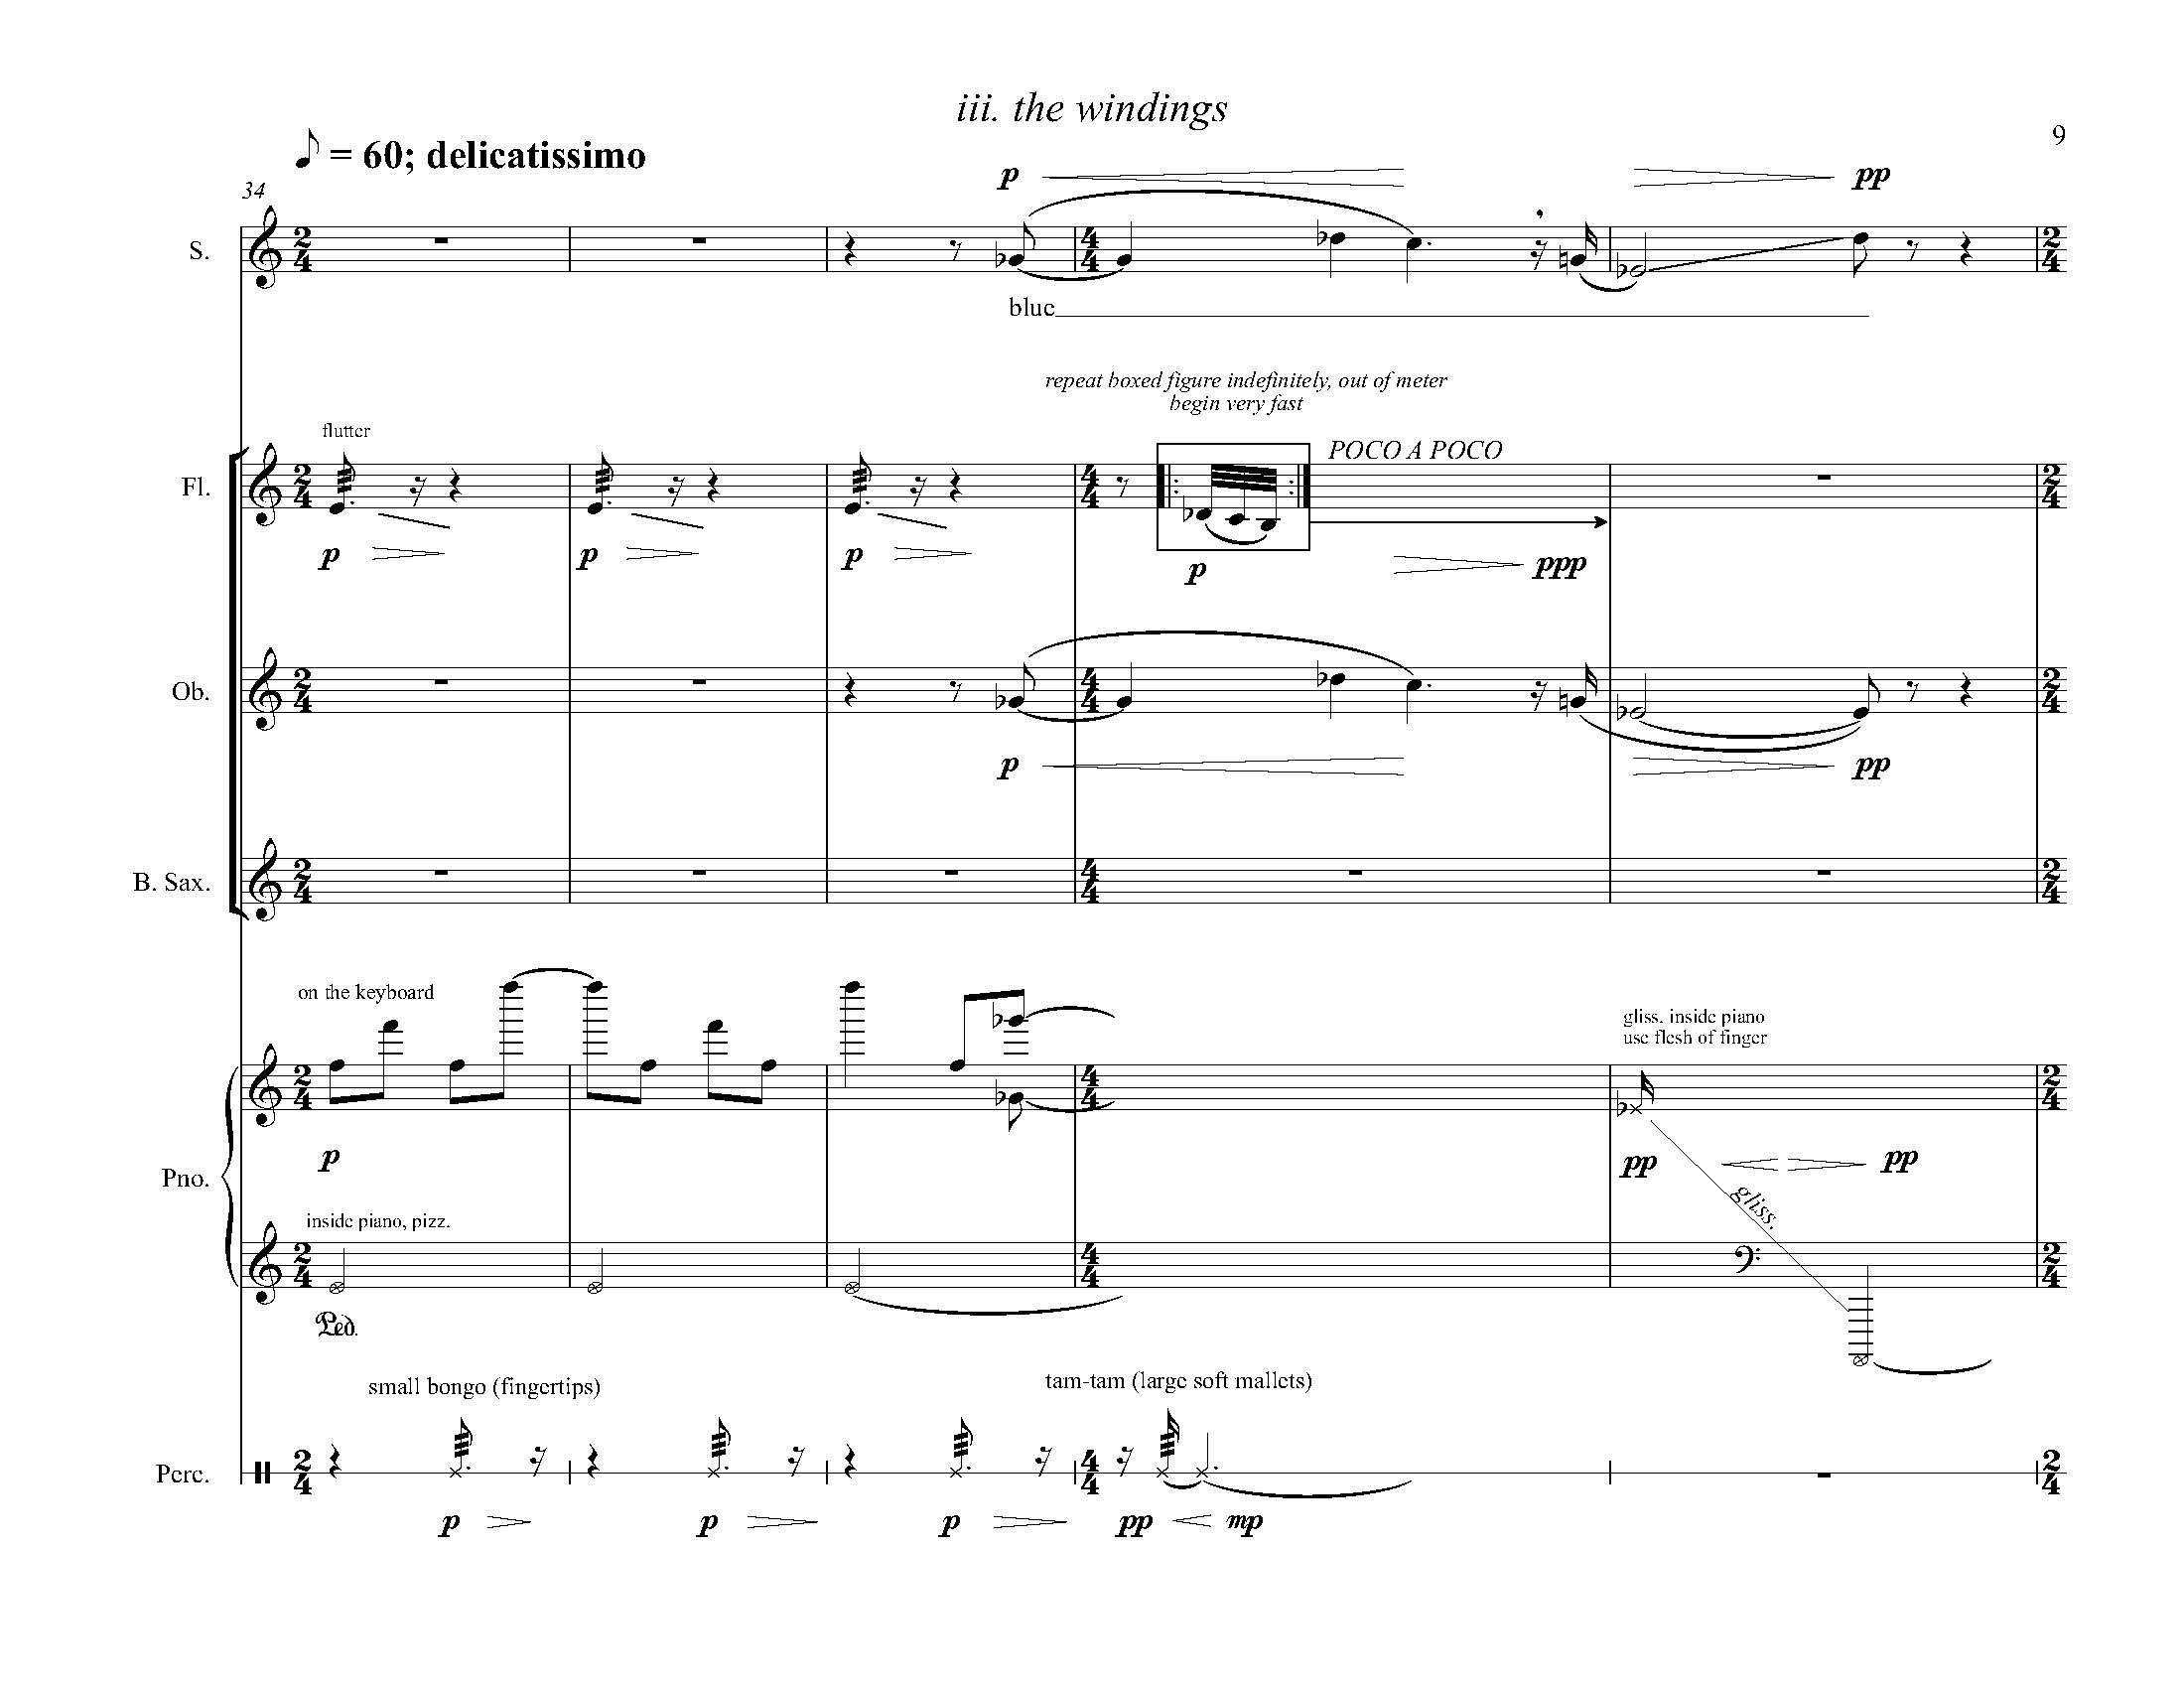 Prince Prospero - Complete Score_Page_15.jpg